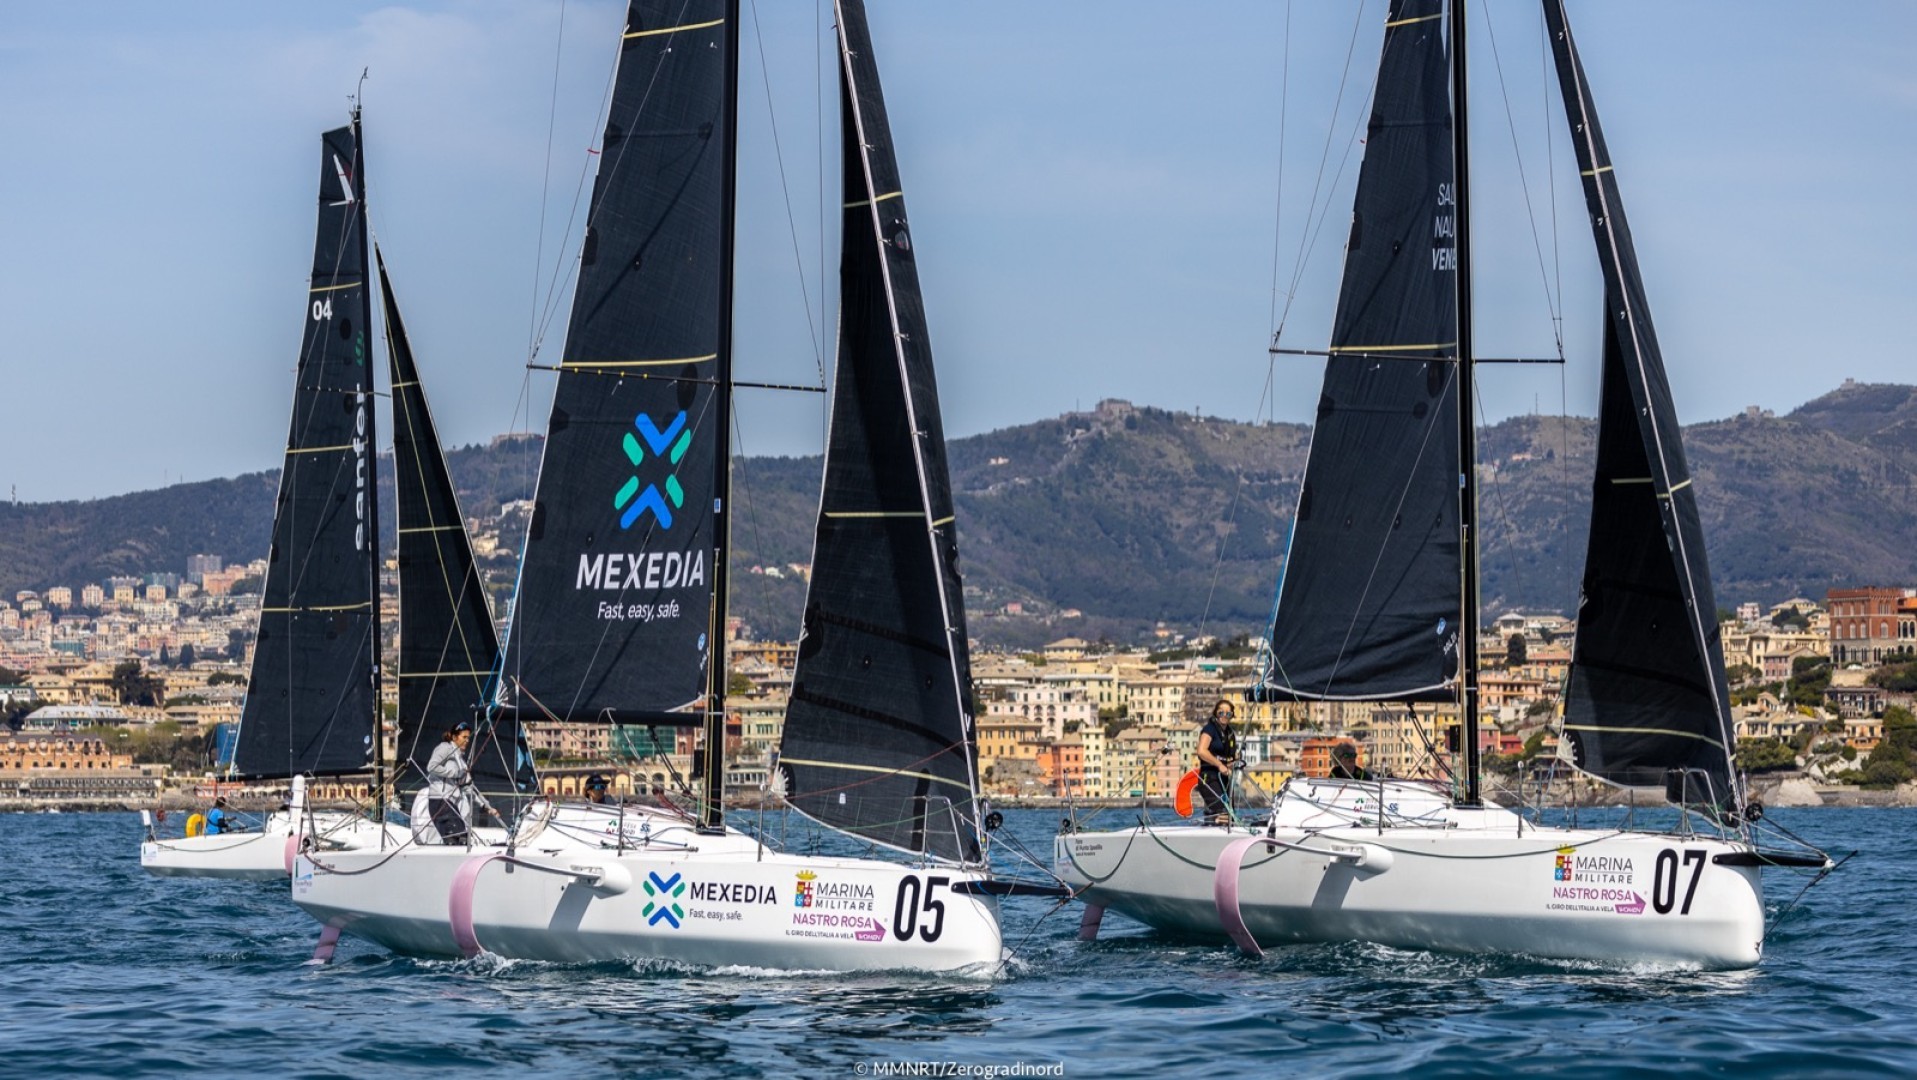 Marina Militare Nastro Rosa Mediterranean Female Offshore Championship